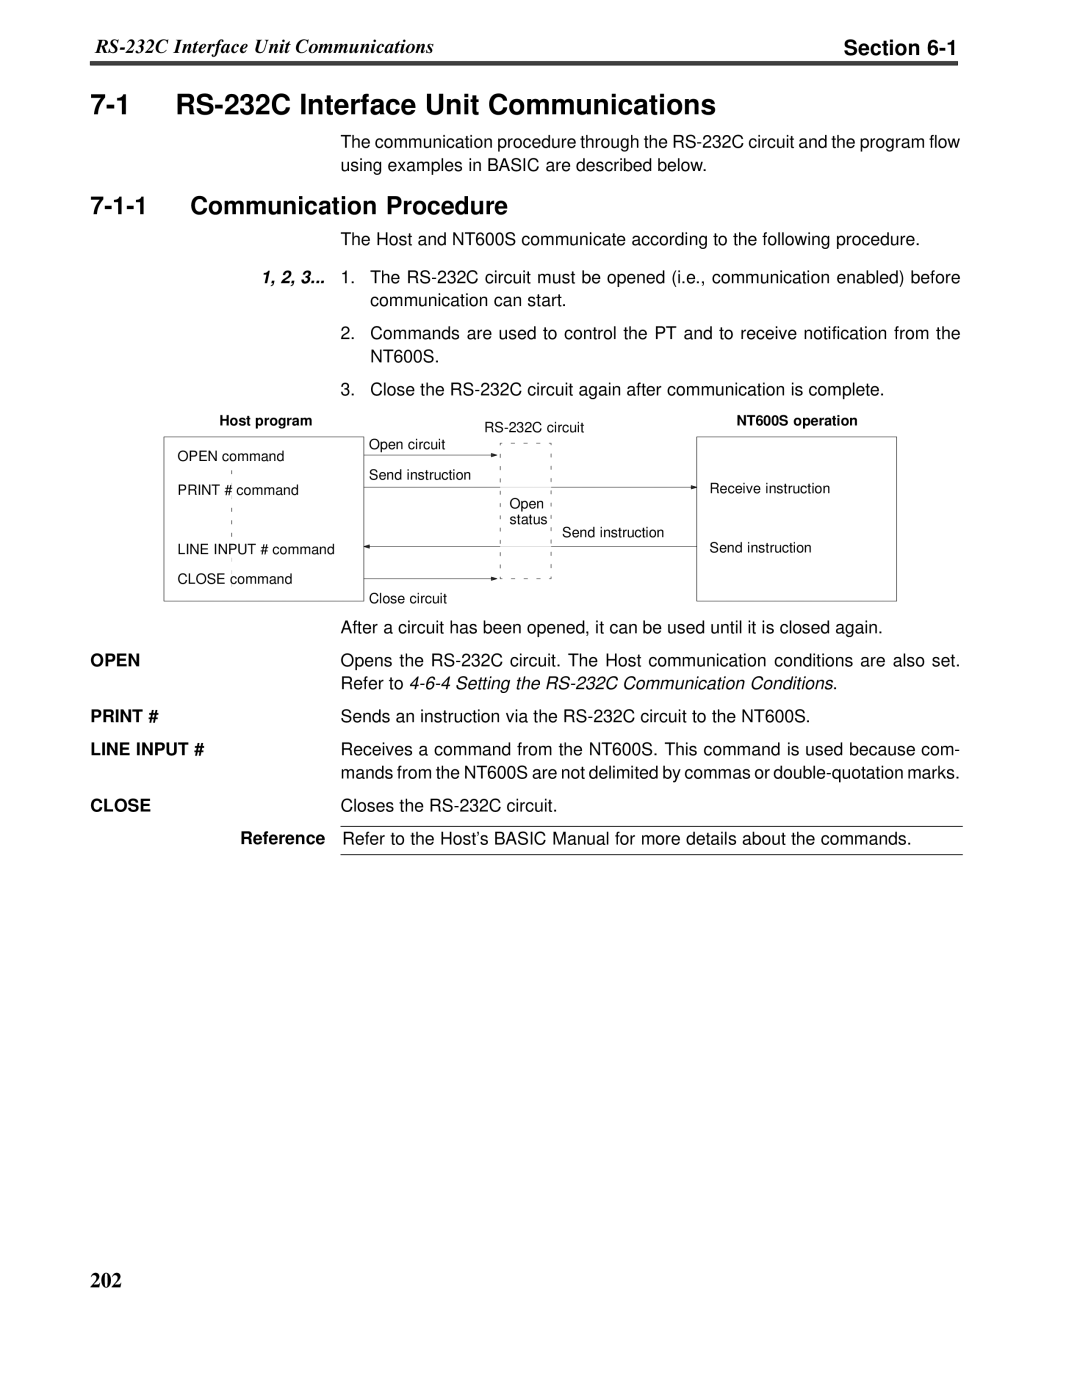 Omron V022-E3-1 7-1 RS-232CInterface Unit Communications, 7-1-1Communication Procedure, Section, Open, Print #, Close 